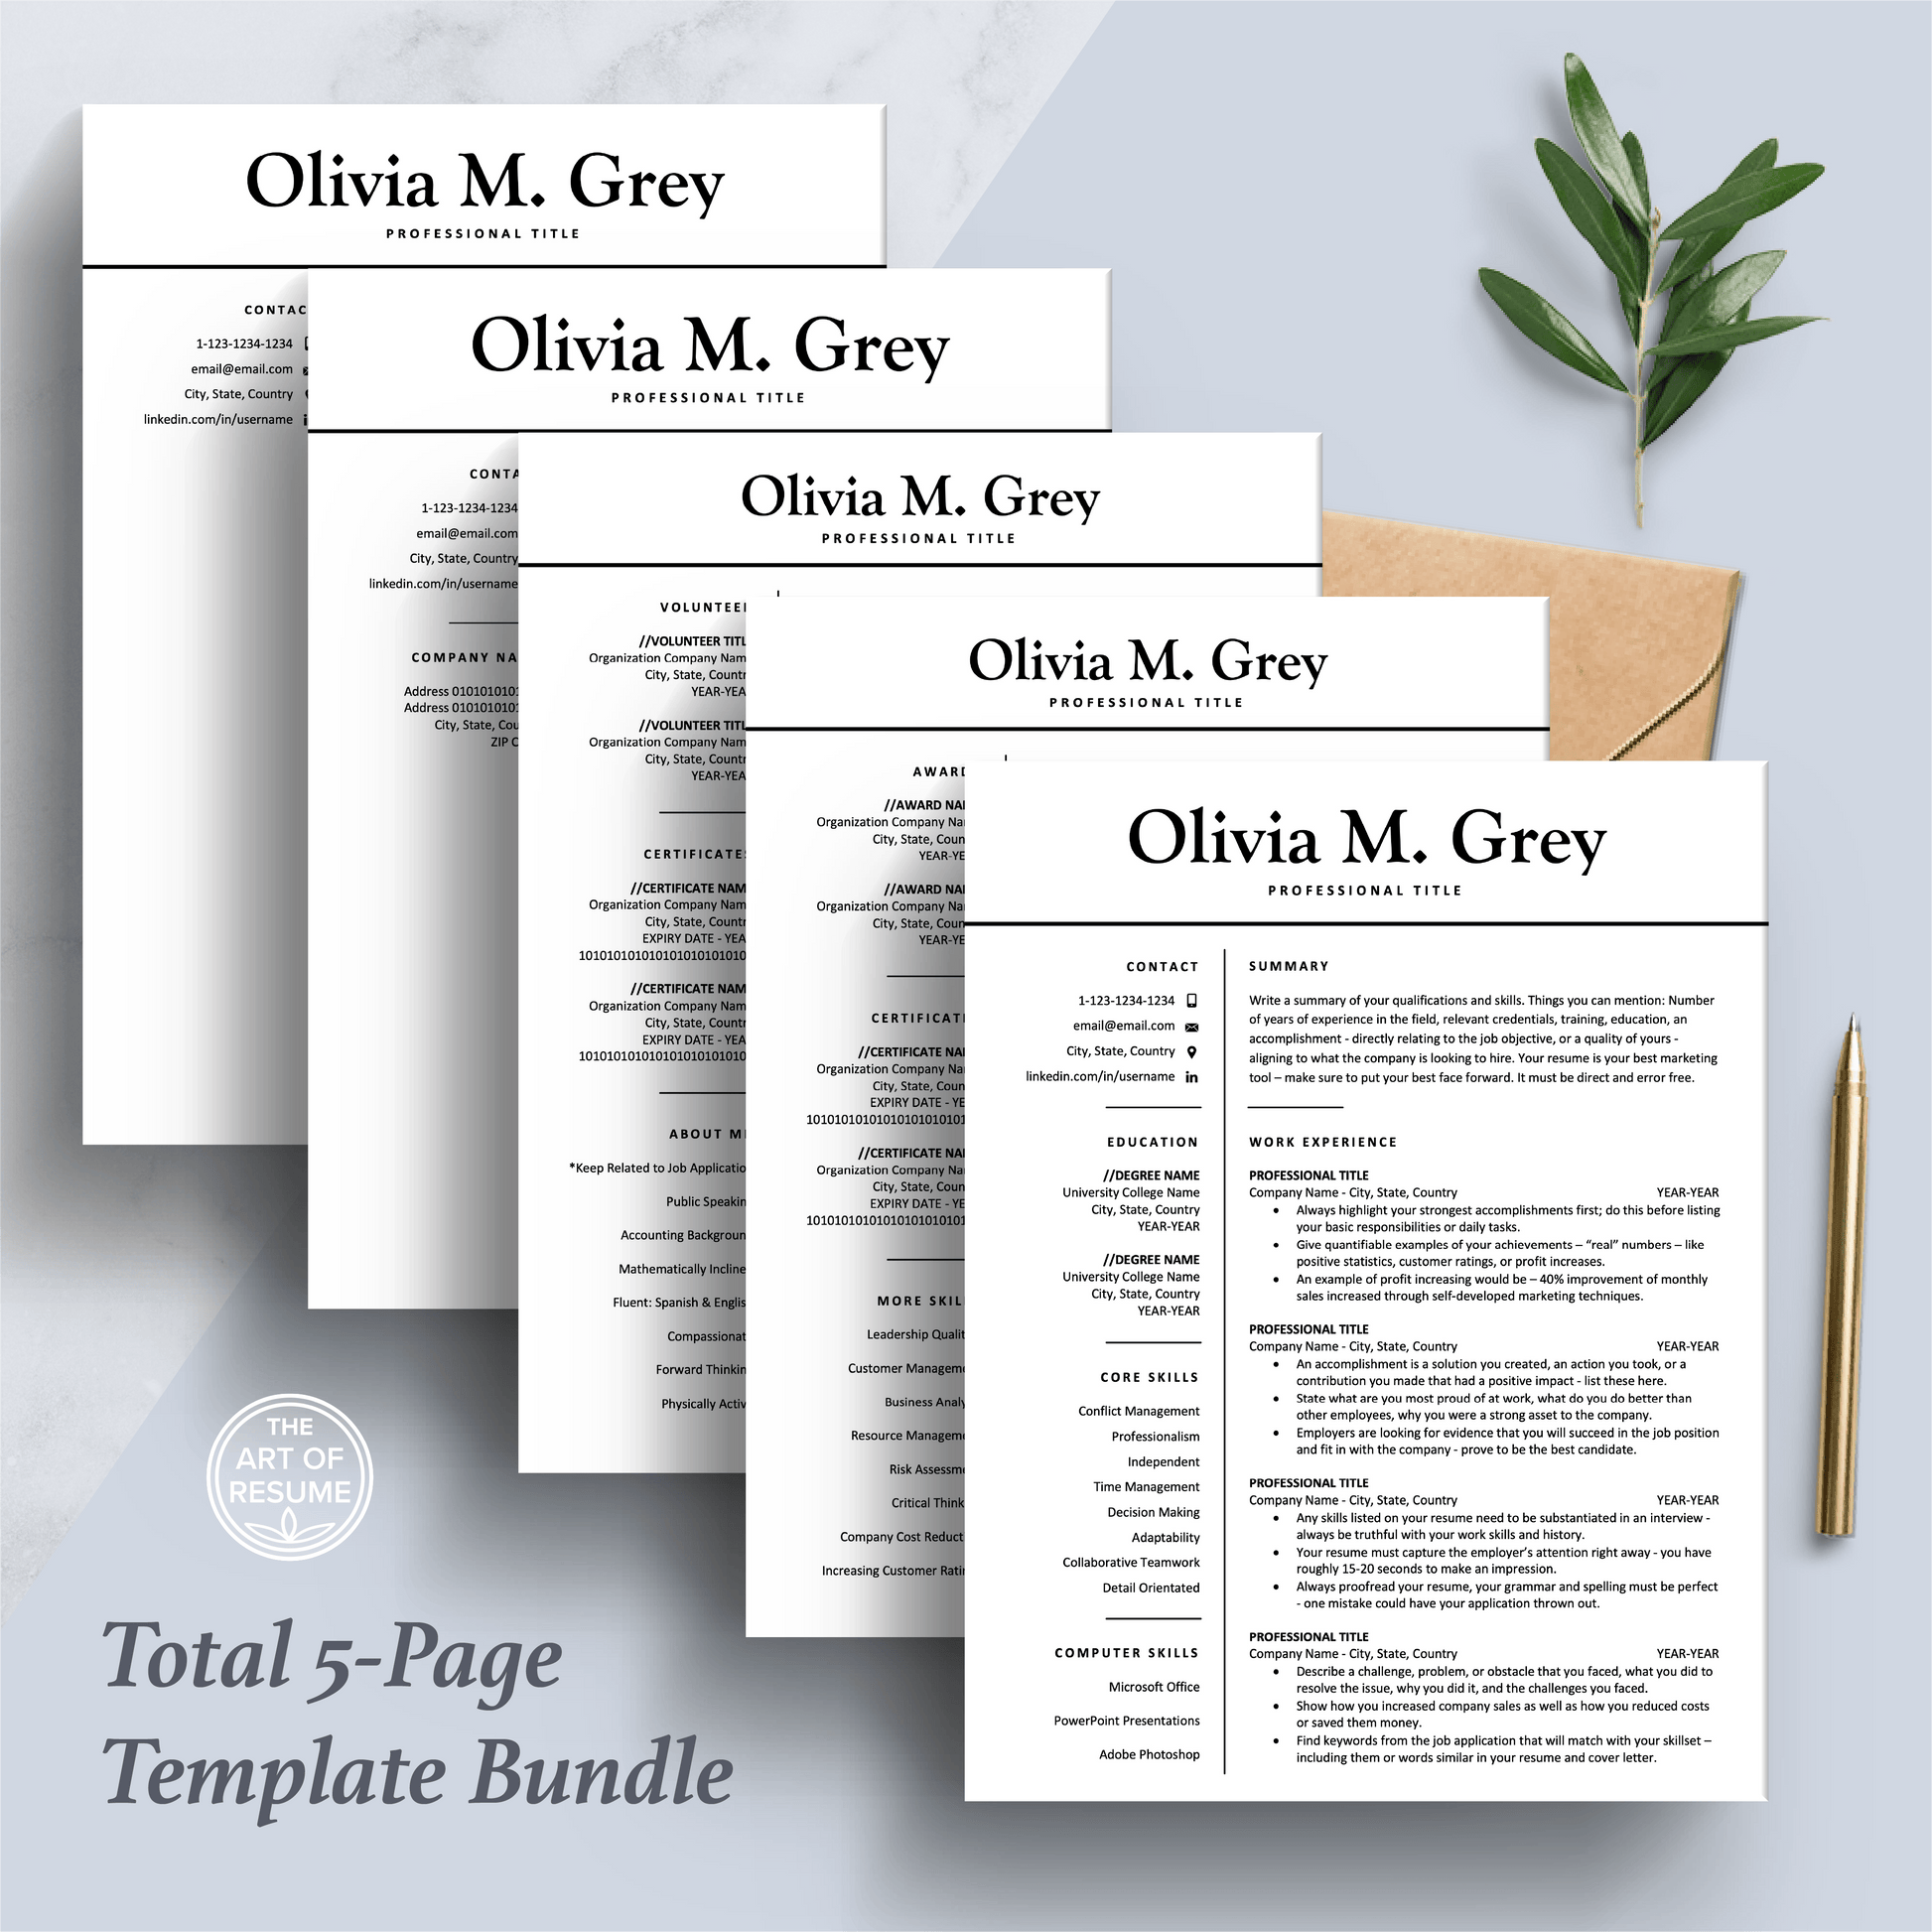 Professional Resume Design | Modern CV Printable | Resume Writing Guide - The Art of Resume